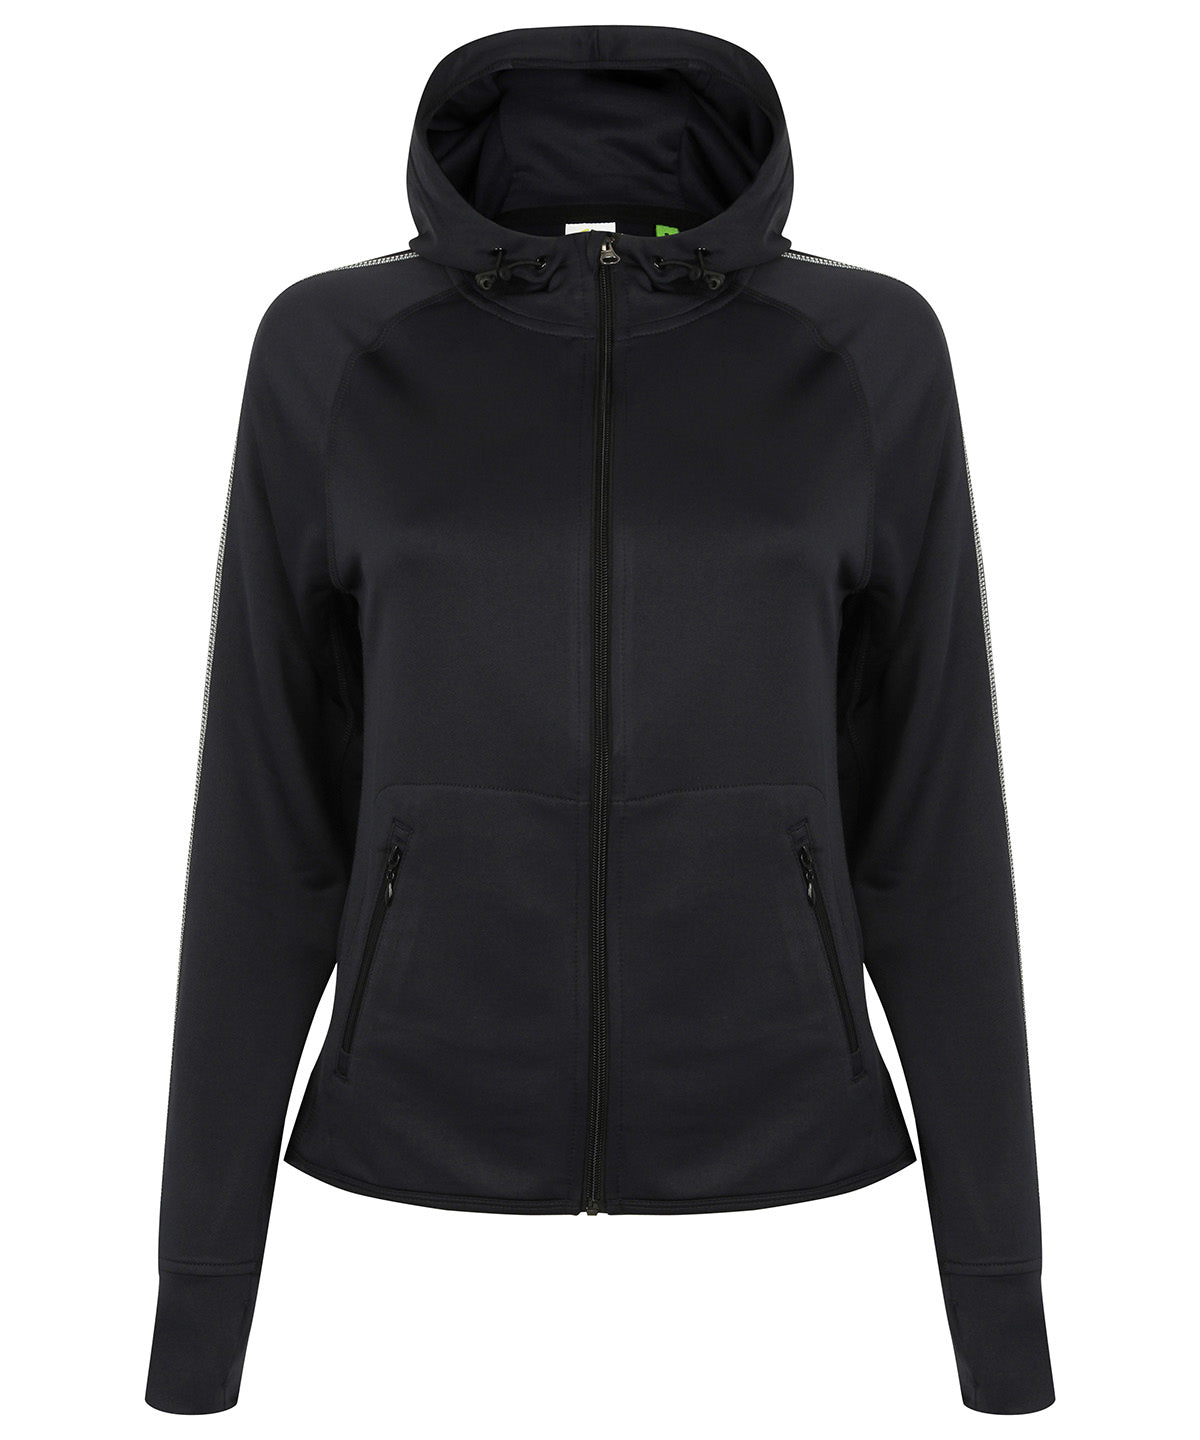 Personalised Hoodies - Black Tombo Women's hoodie with reflective tape